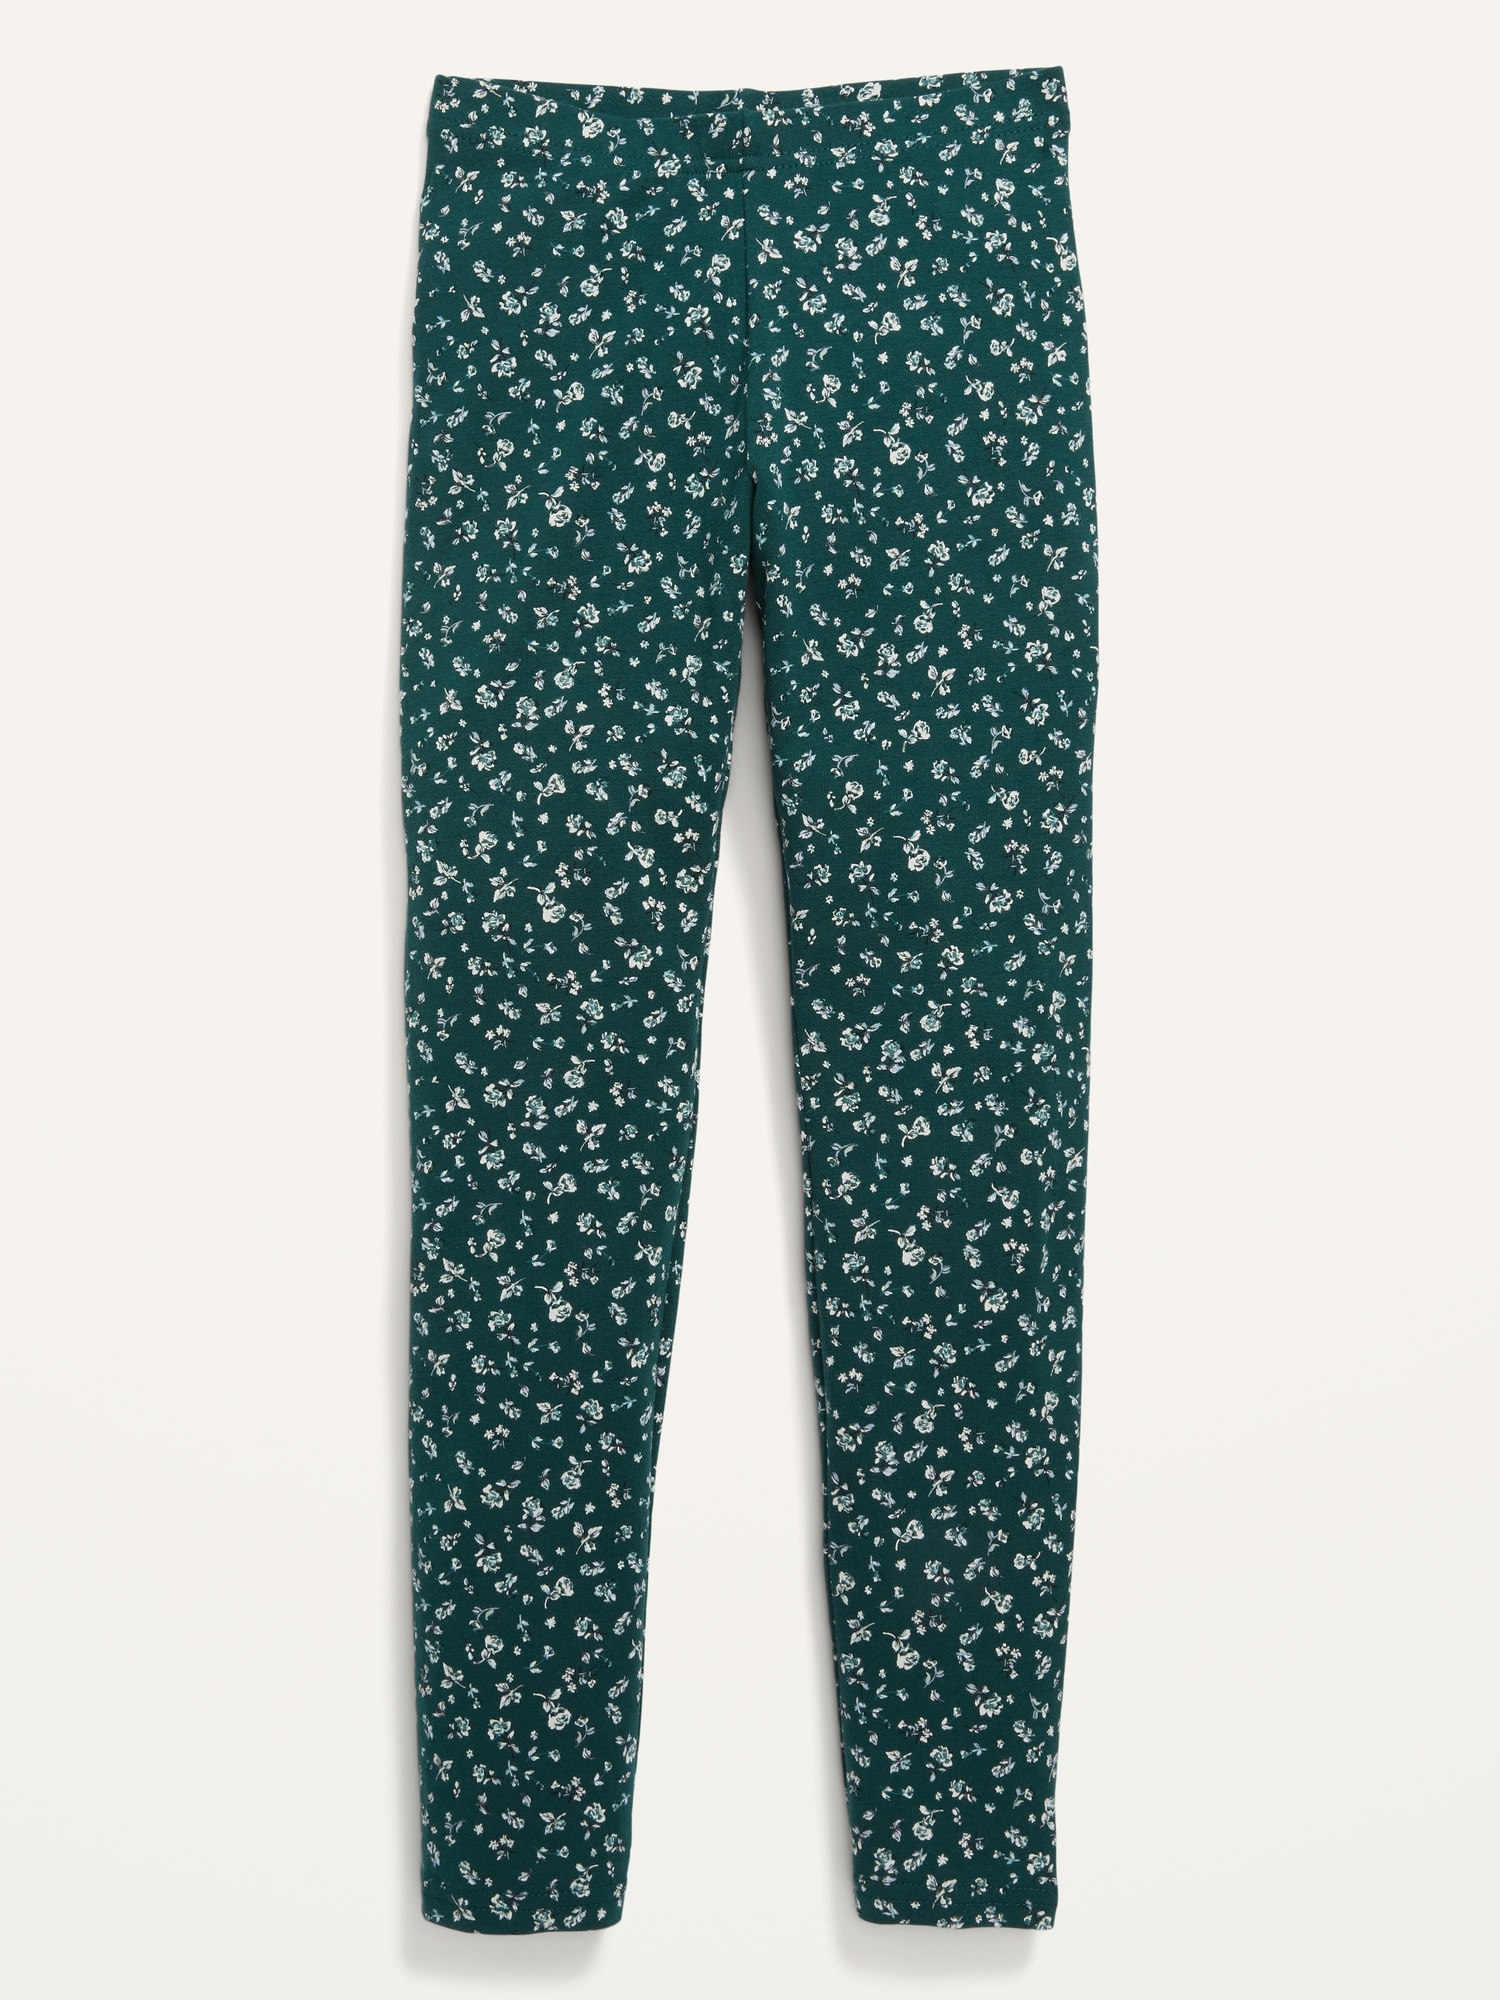 Printed Leggings for Girls - grey green, Girls